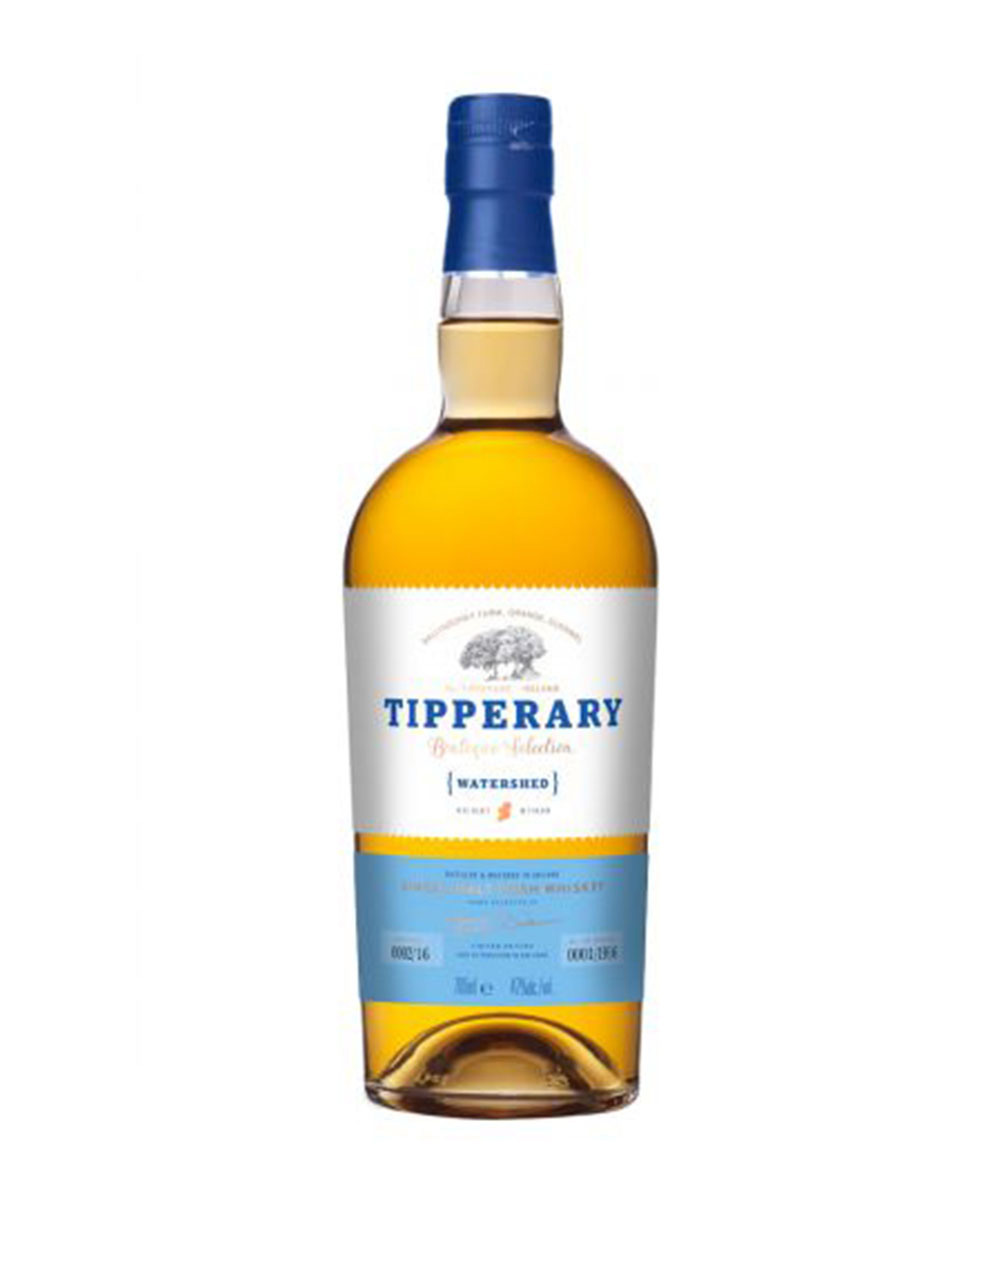 Tipperary Watershed Irish Single Malt Whiskey